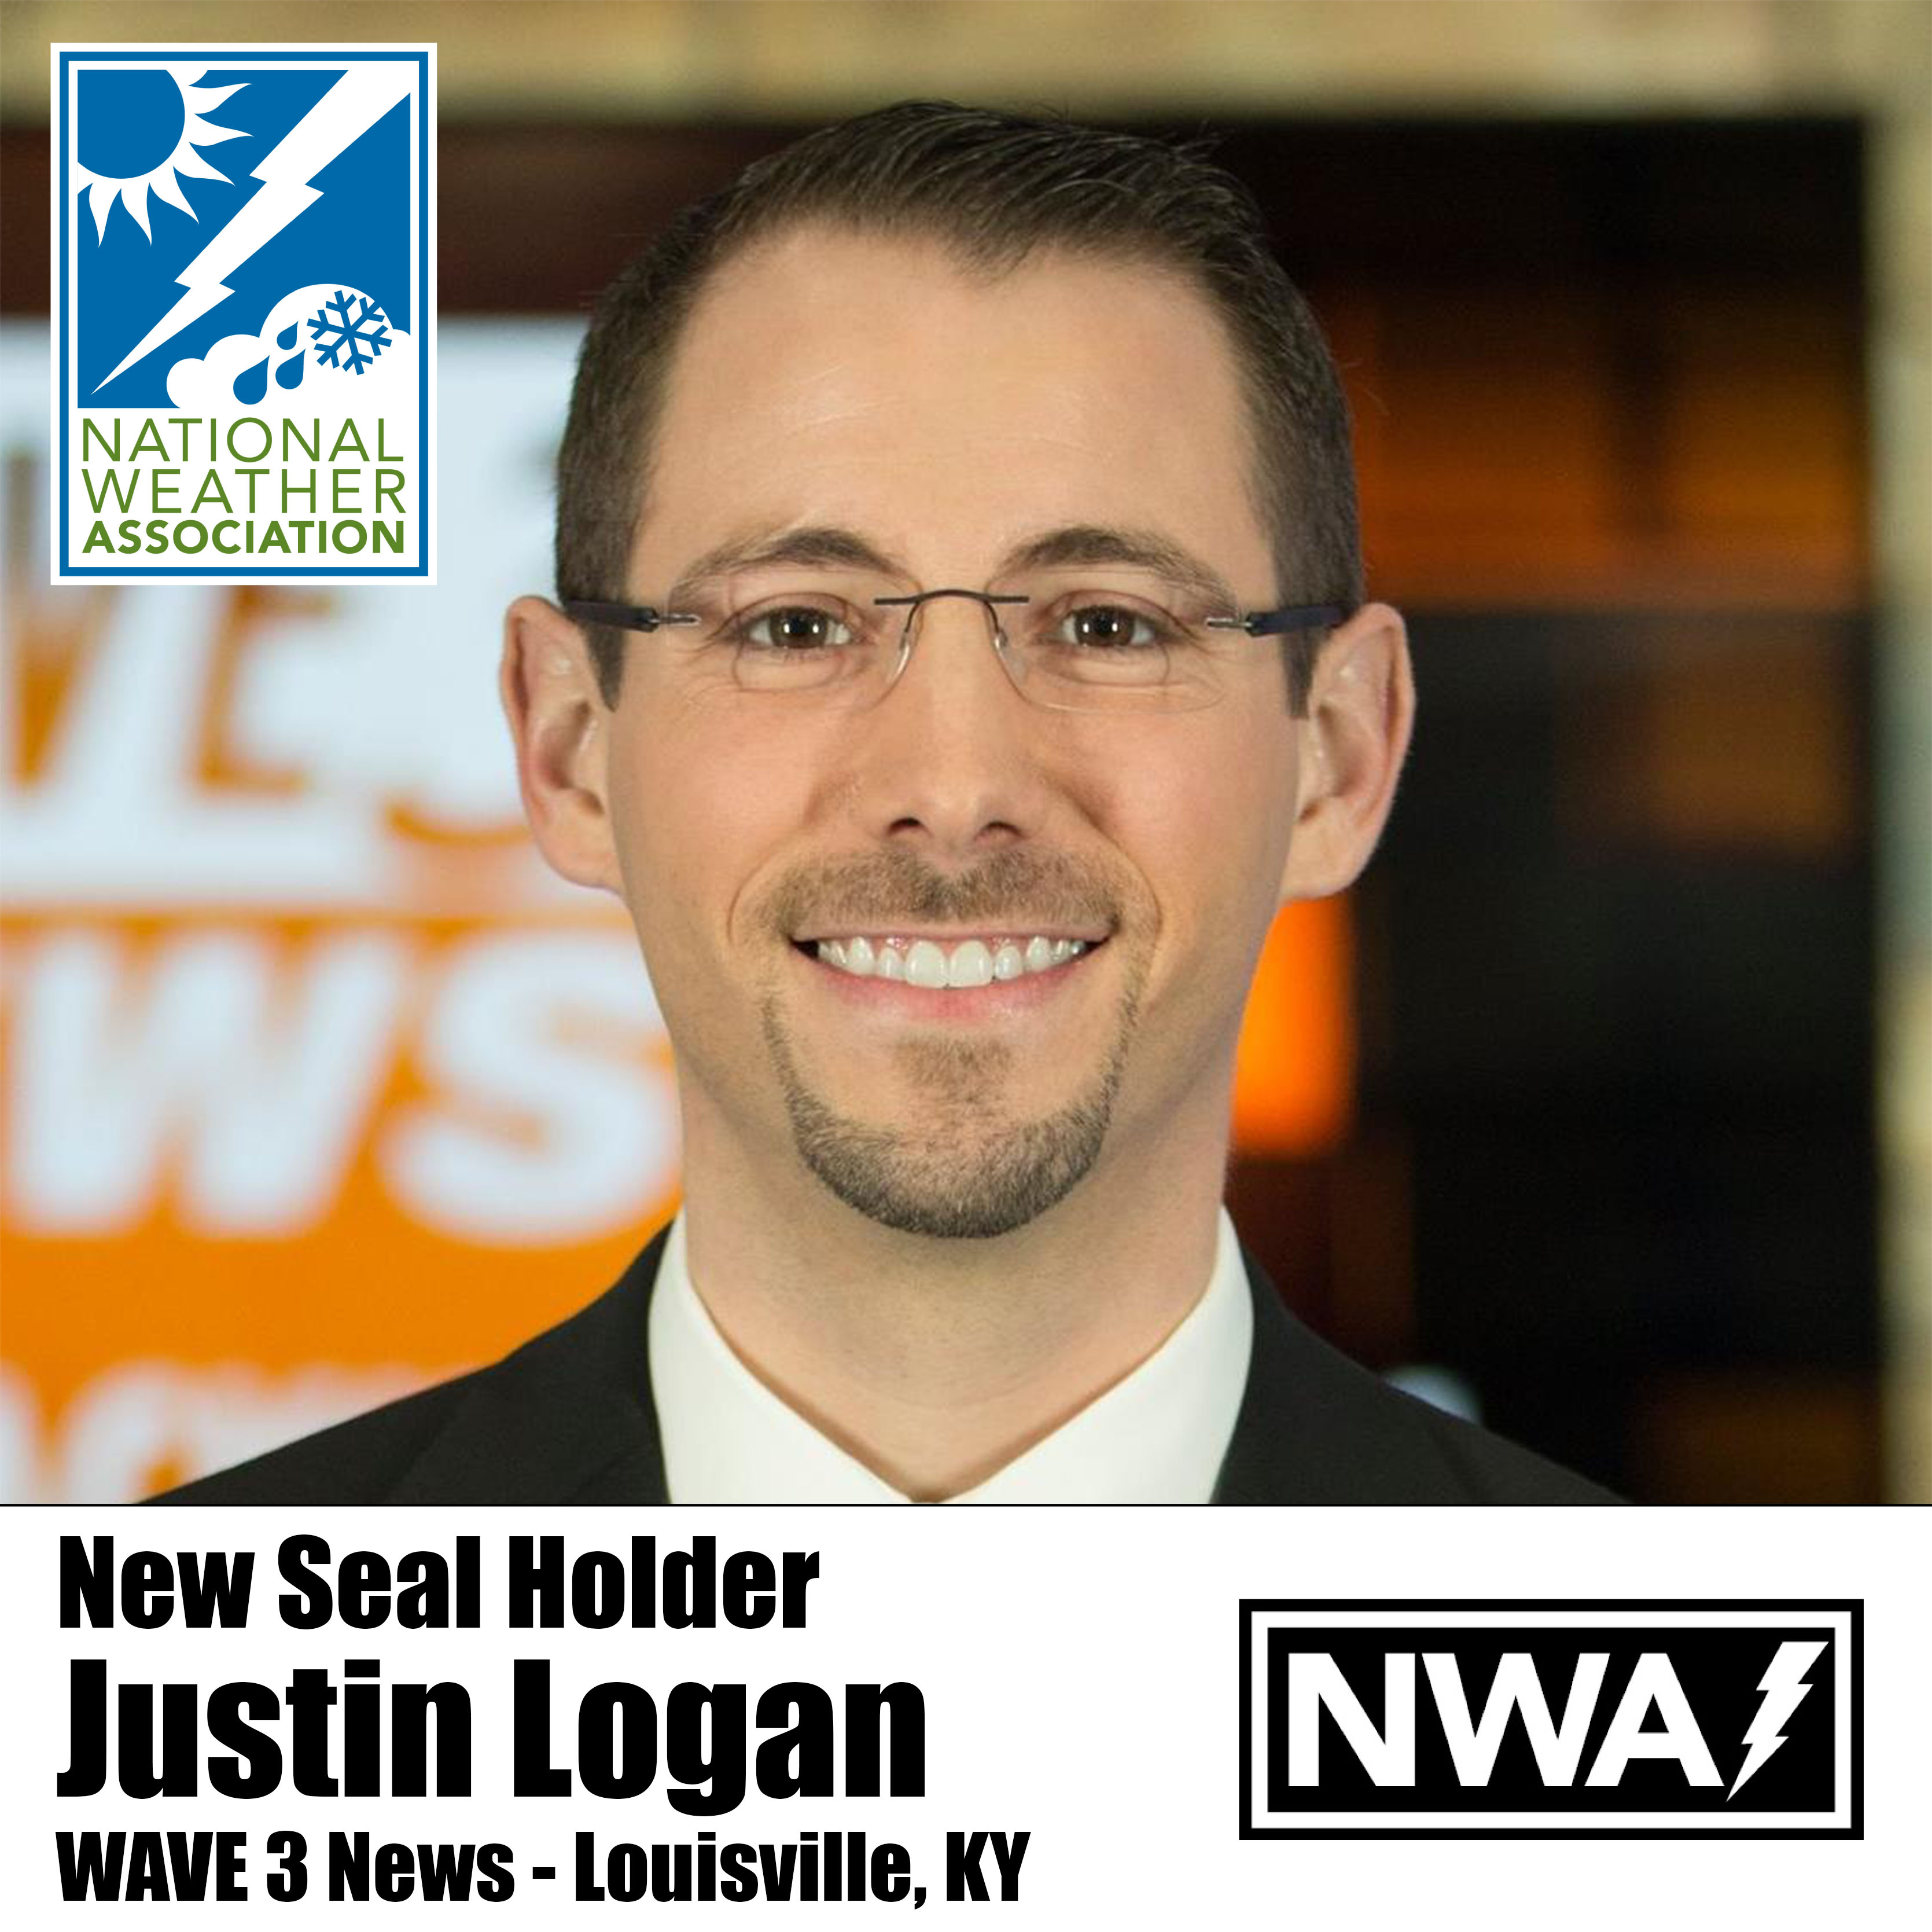 Justin Logan of WAVE 3 News in Louisville, Kentucky